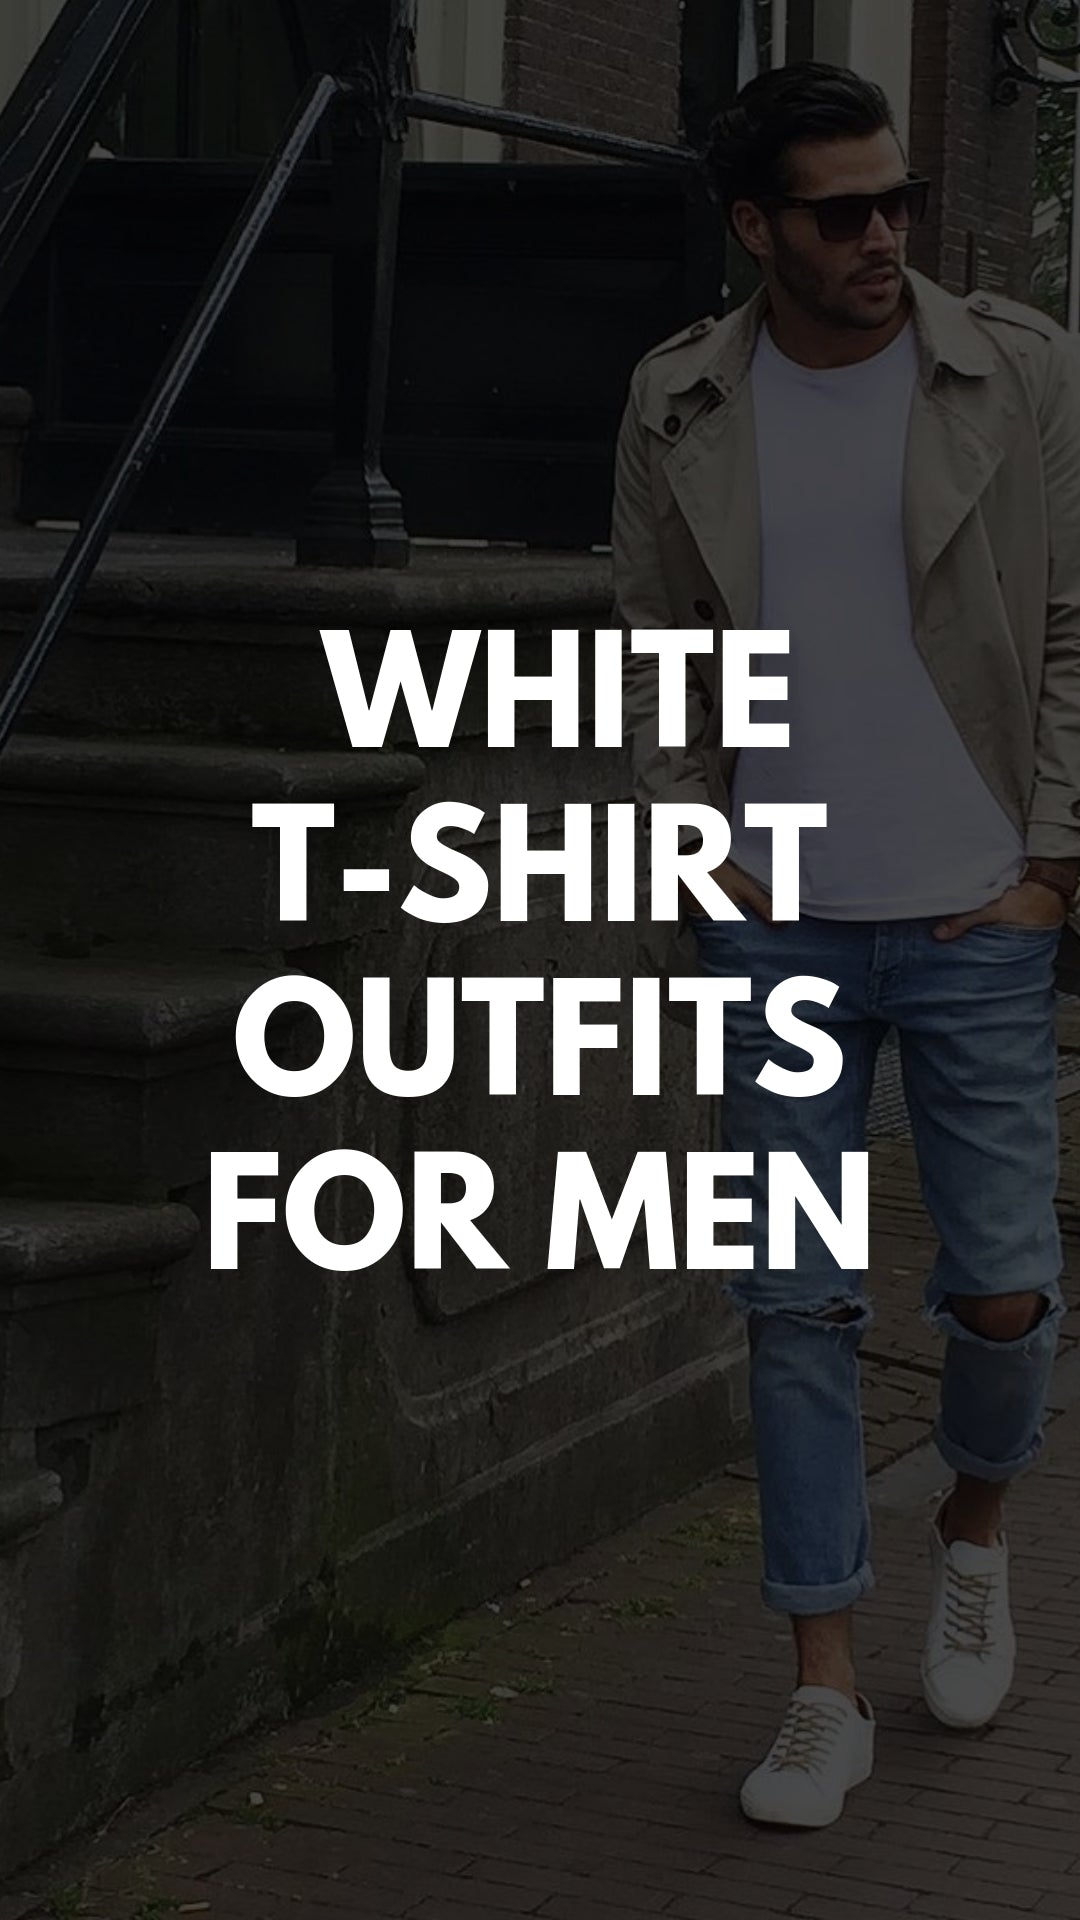 White t-shirt outfits for men. #whitetshirt #outfits #mensfashion #streetstyle